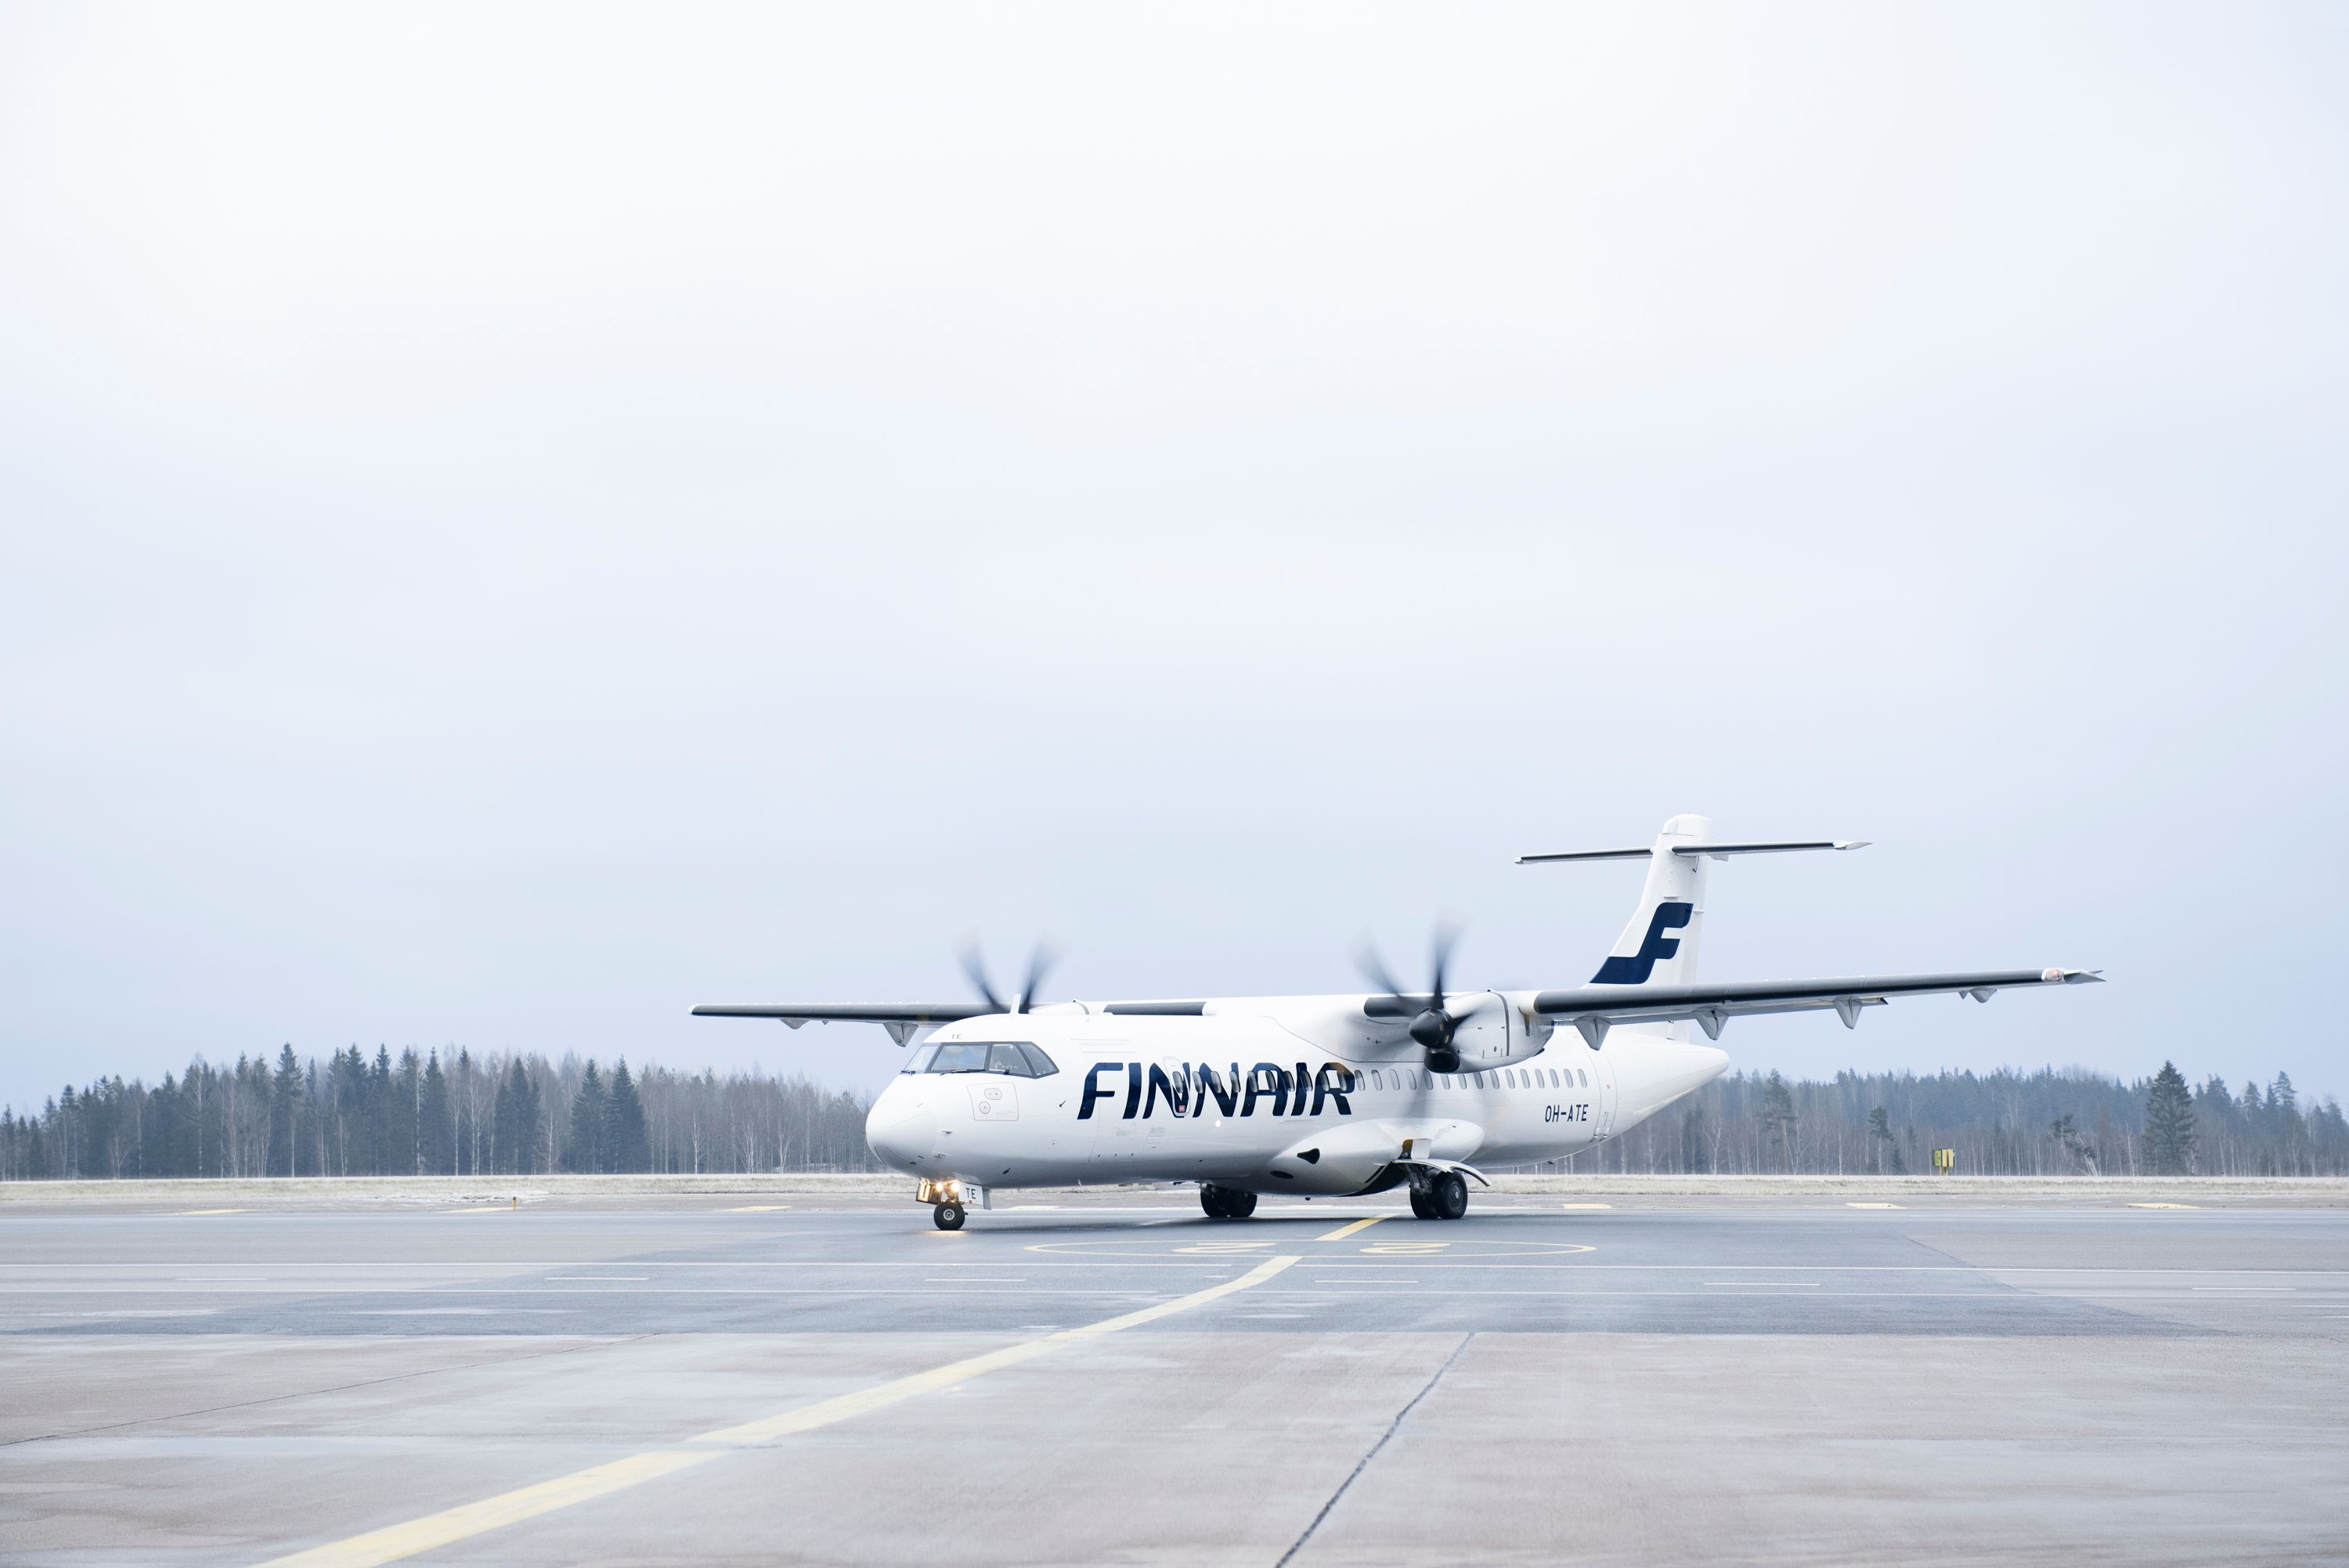 Finnair ATR 72 taxiing at the airport.